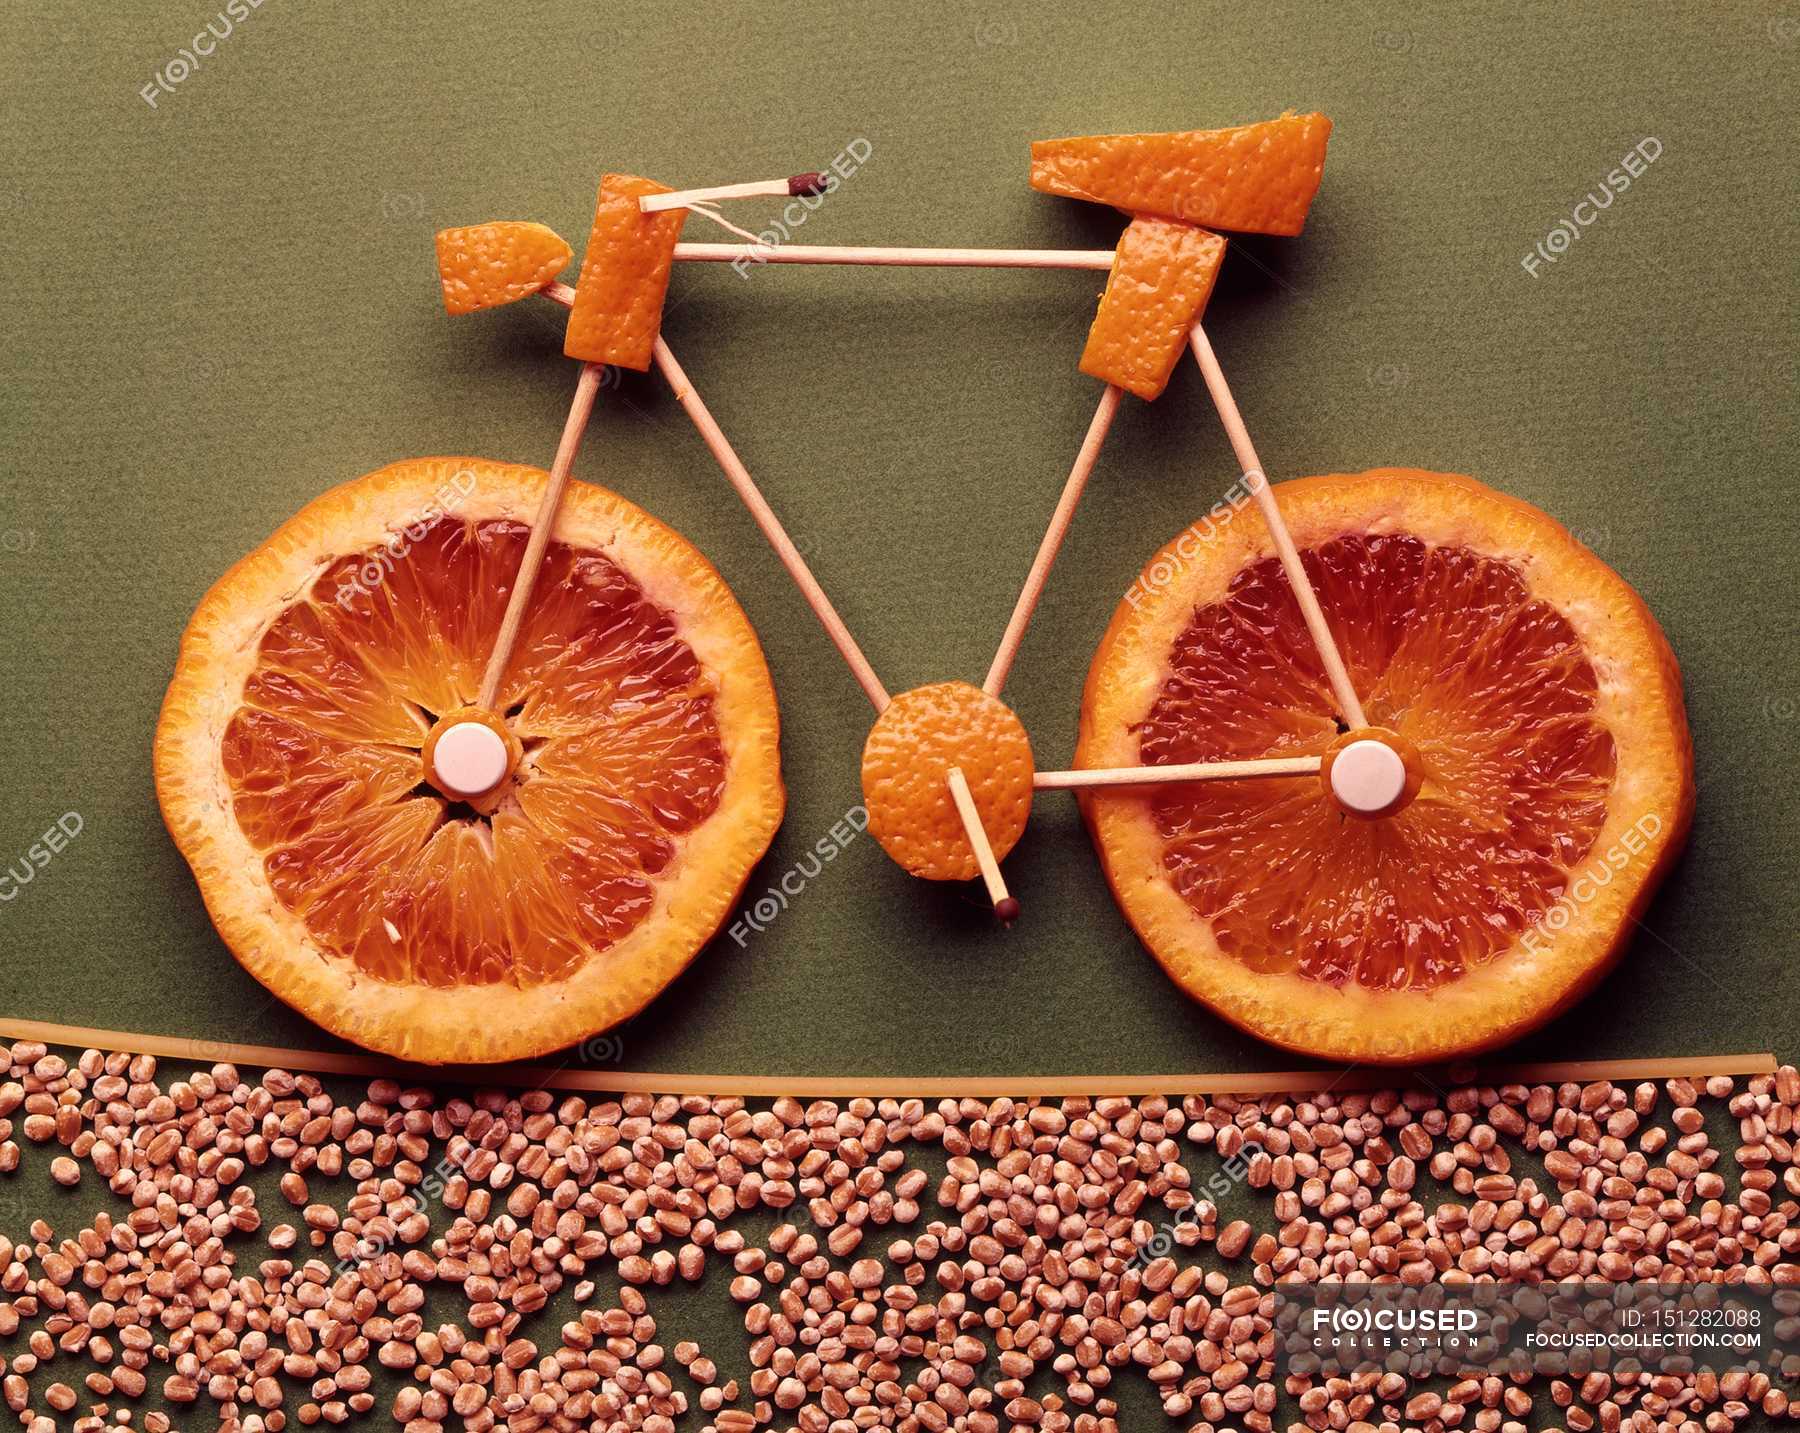 Реклама мандаринов. Креативный апельсин. Креативный мандарин. Фрукты для энергии и бодрости. Реклама мандарина.